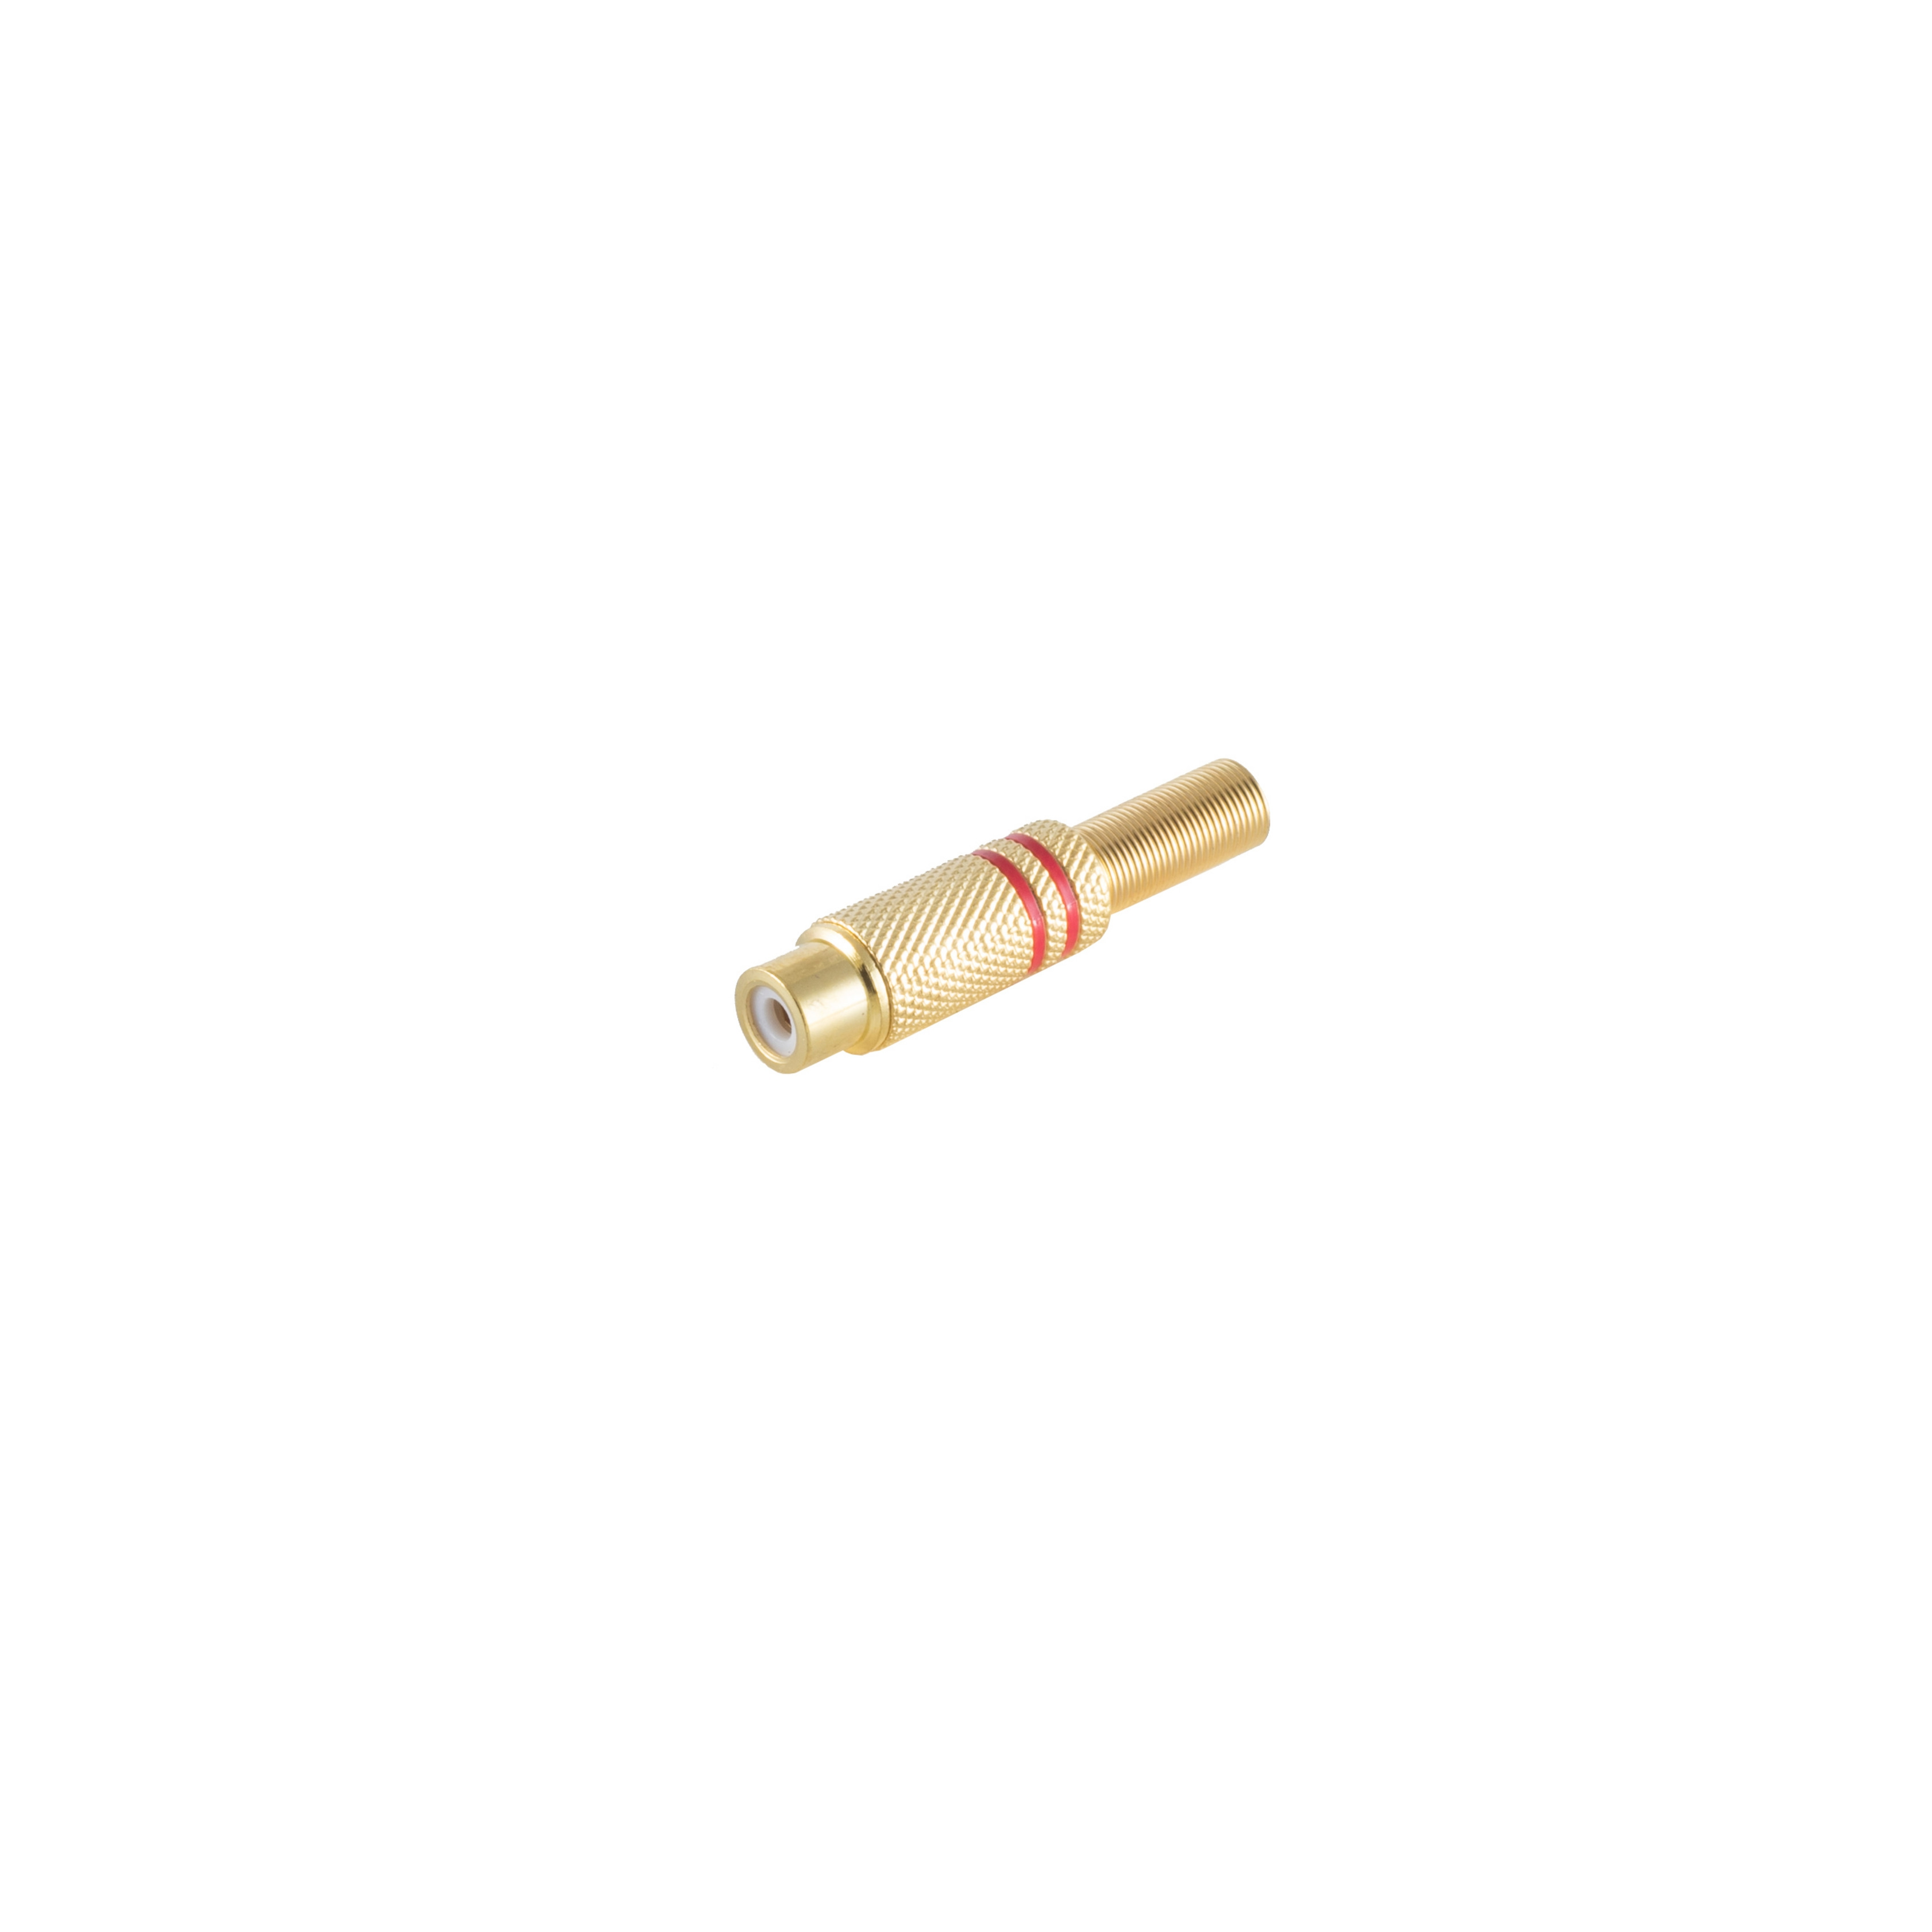 S/CONN MAXIMUM CONNECTIVITY Cinchkupplung Cinch rot vergoldet, 6mm, Metall